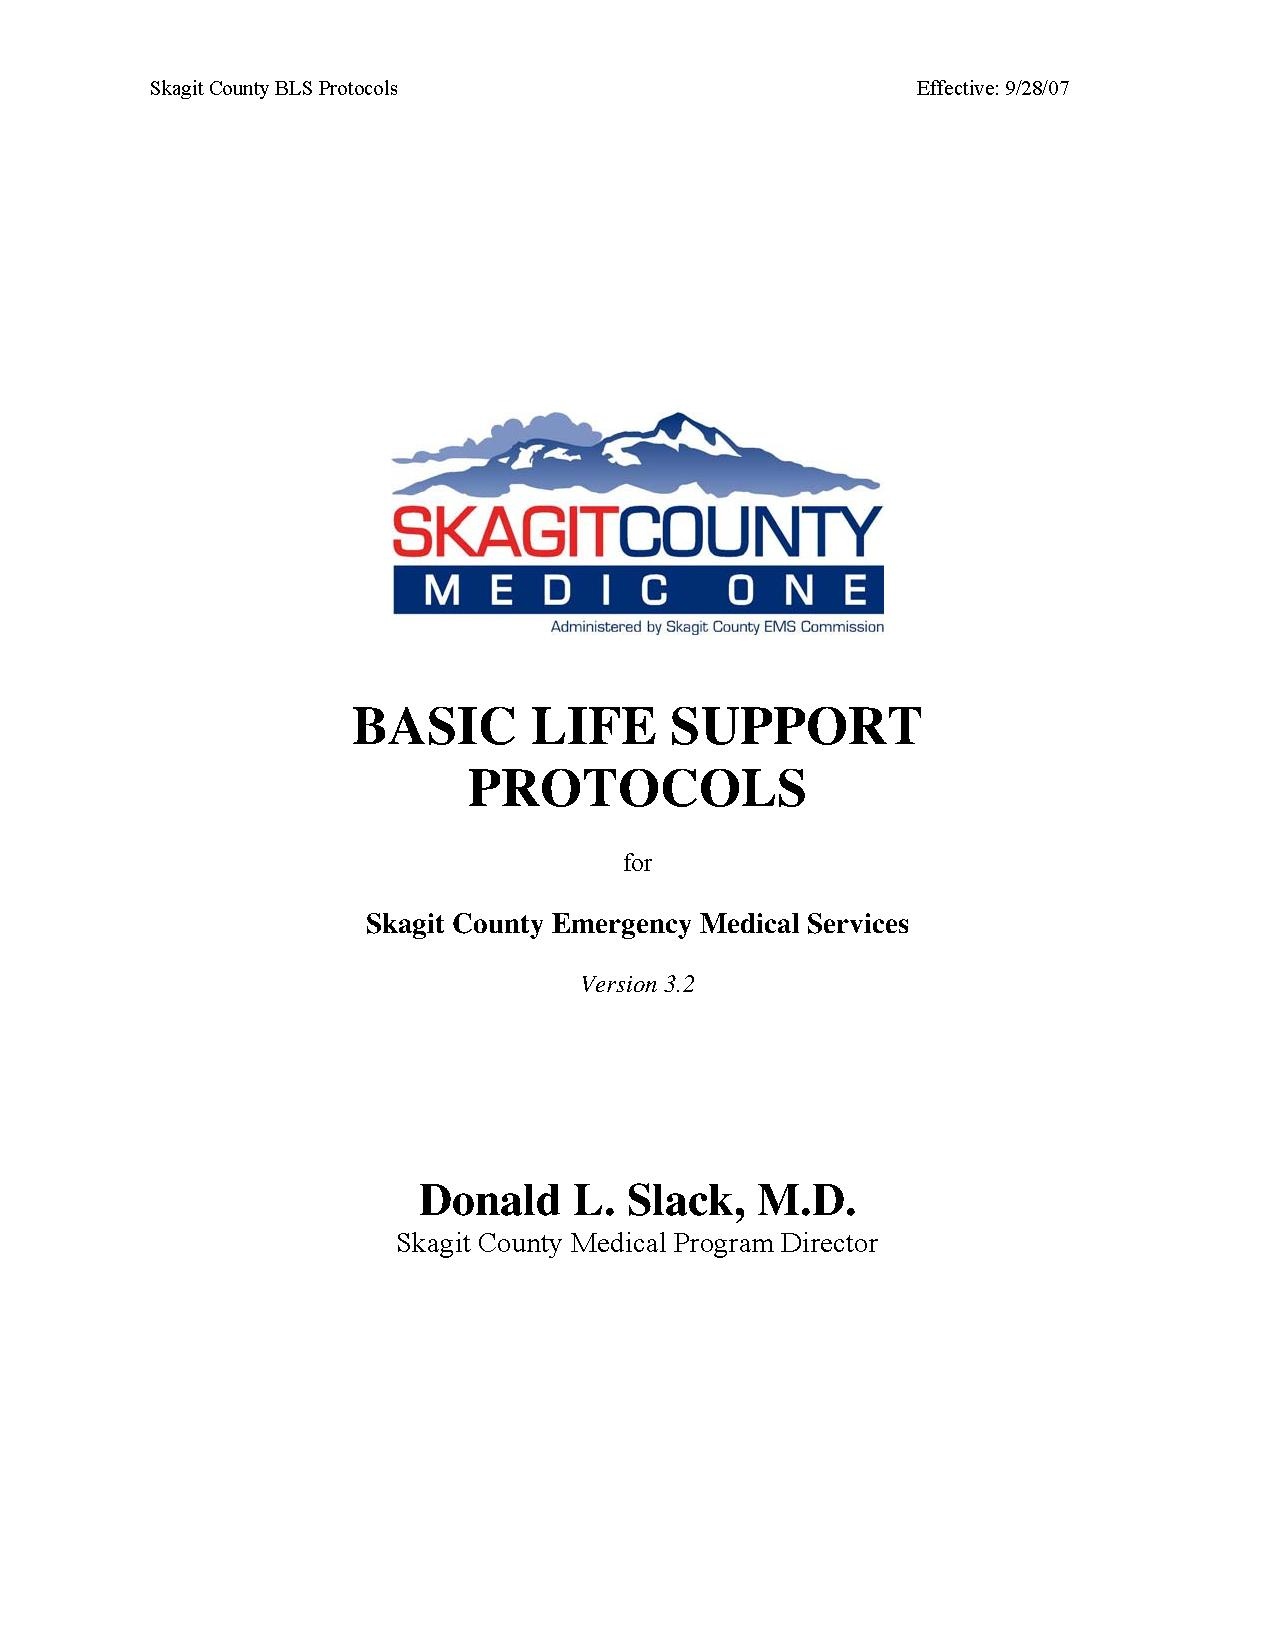 BLS Protocols v3.2.pdf